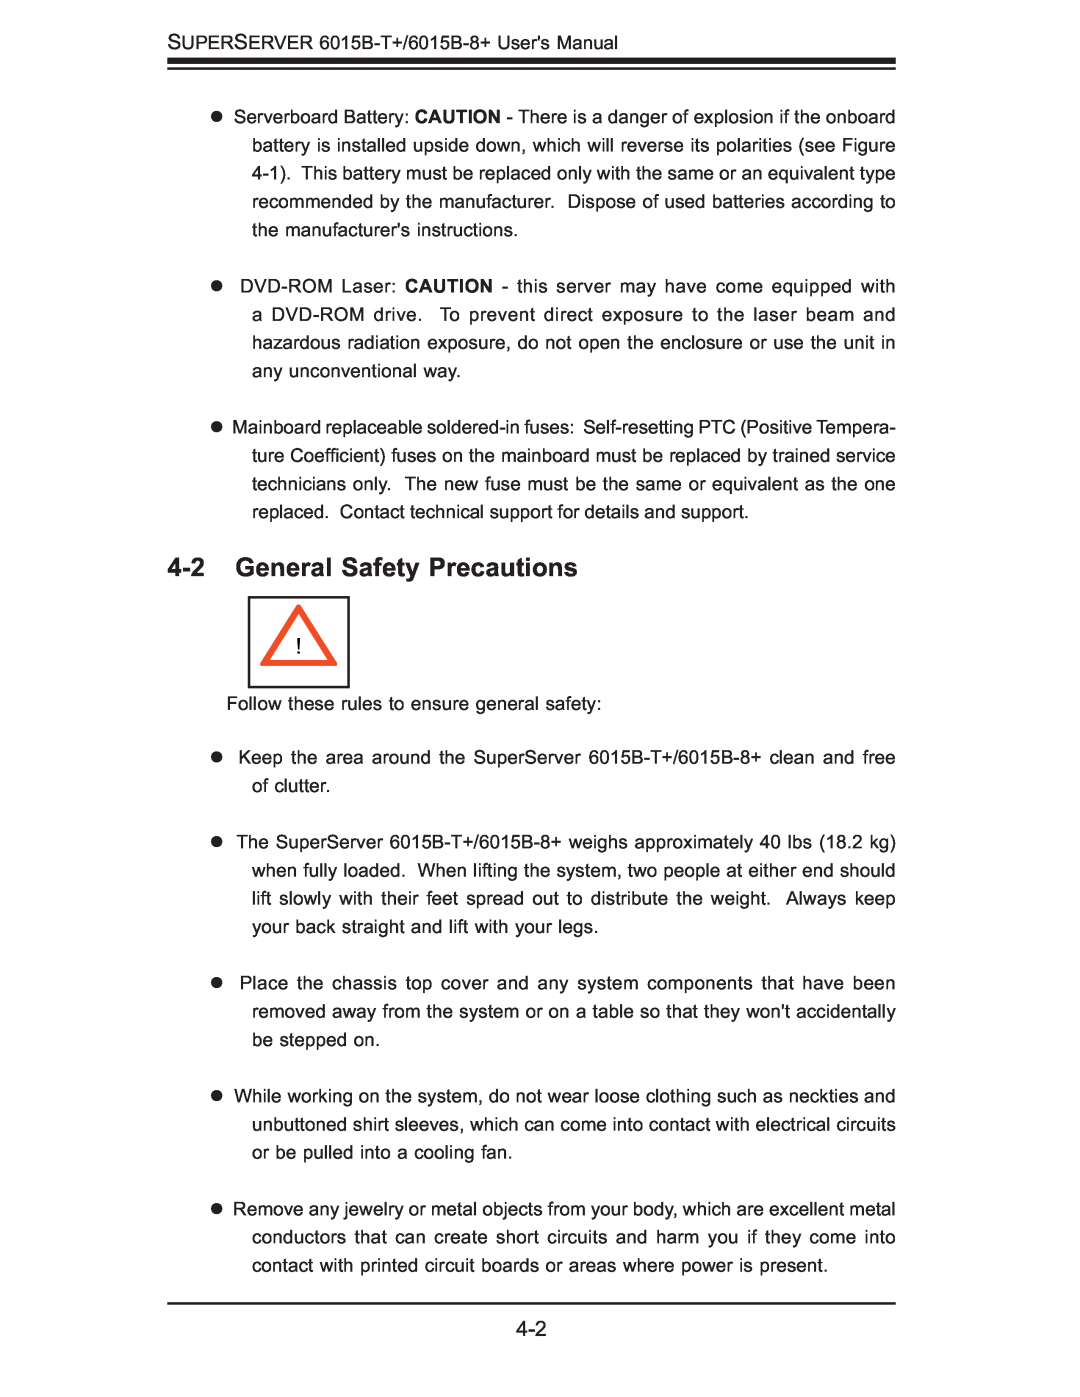 SUPER MICRO Computer 6015B-8+ manual General Safety Precautions 